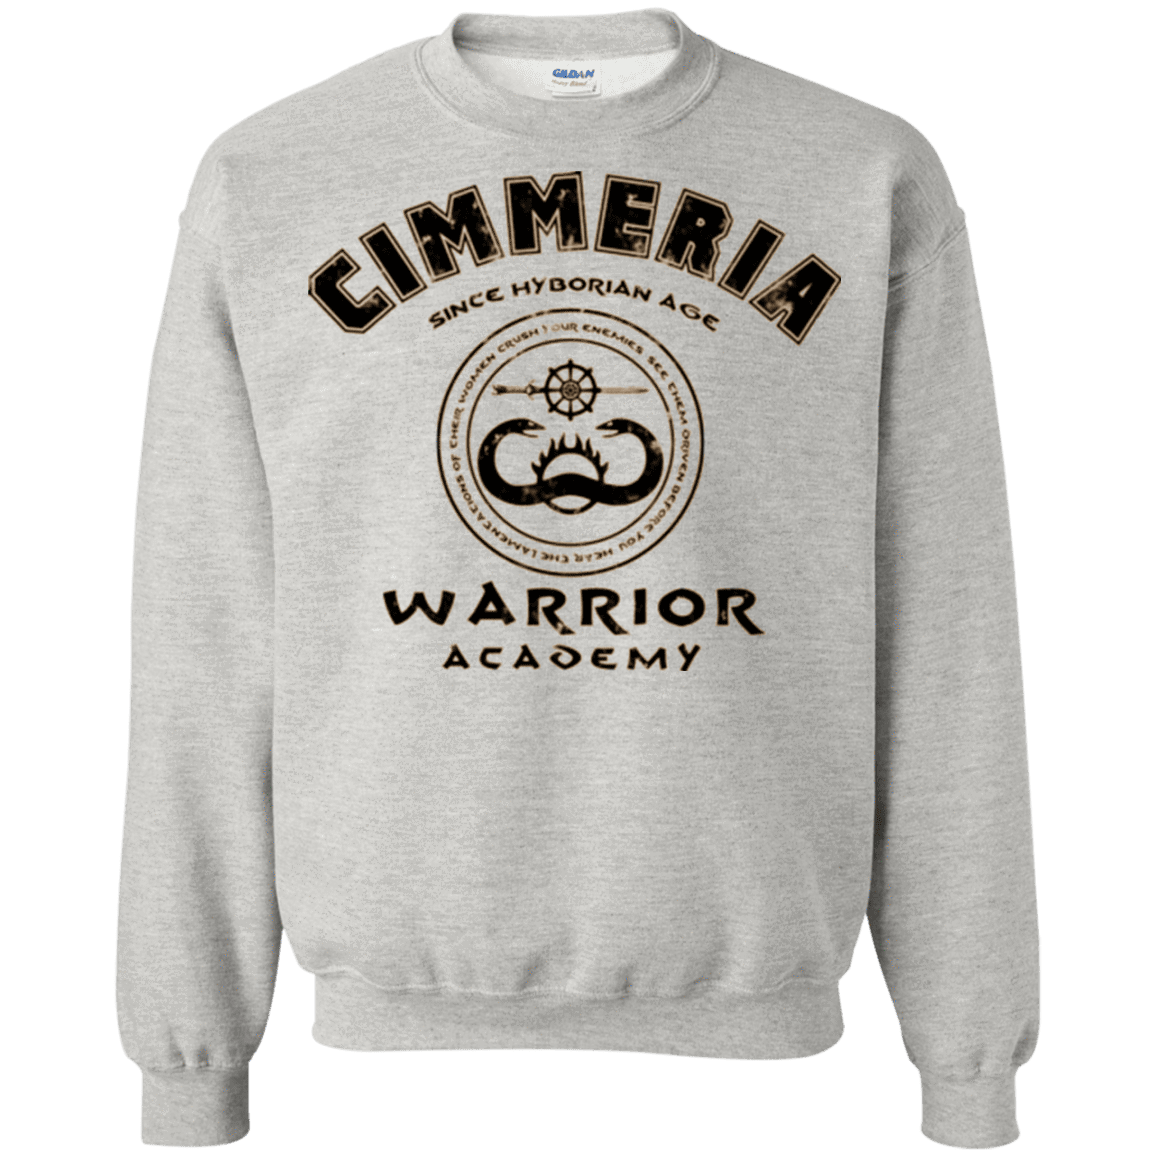 Sweatshirts Ash / Small Crimmeria Warrior academy Crewneck Sweatshirt